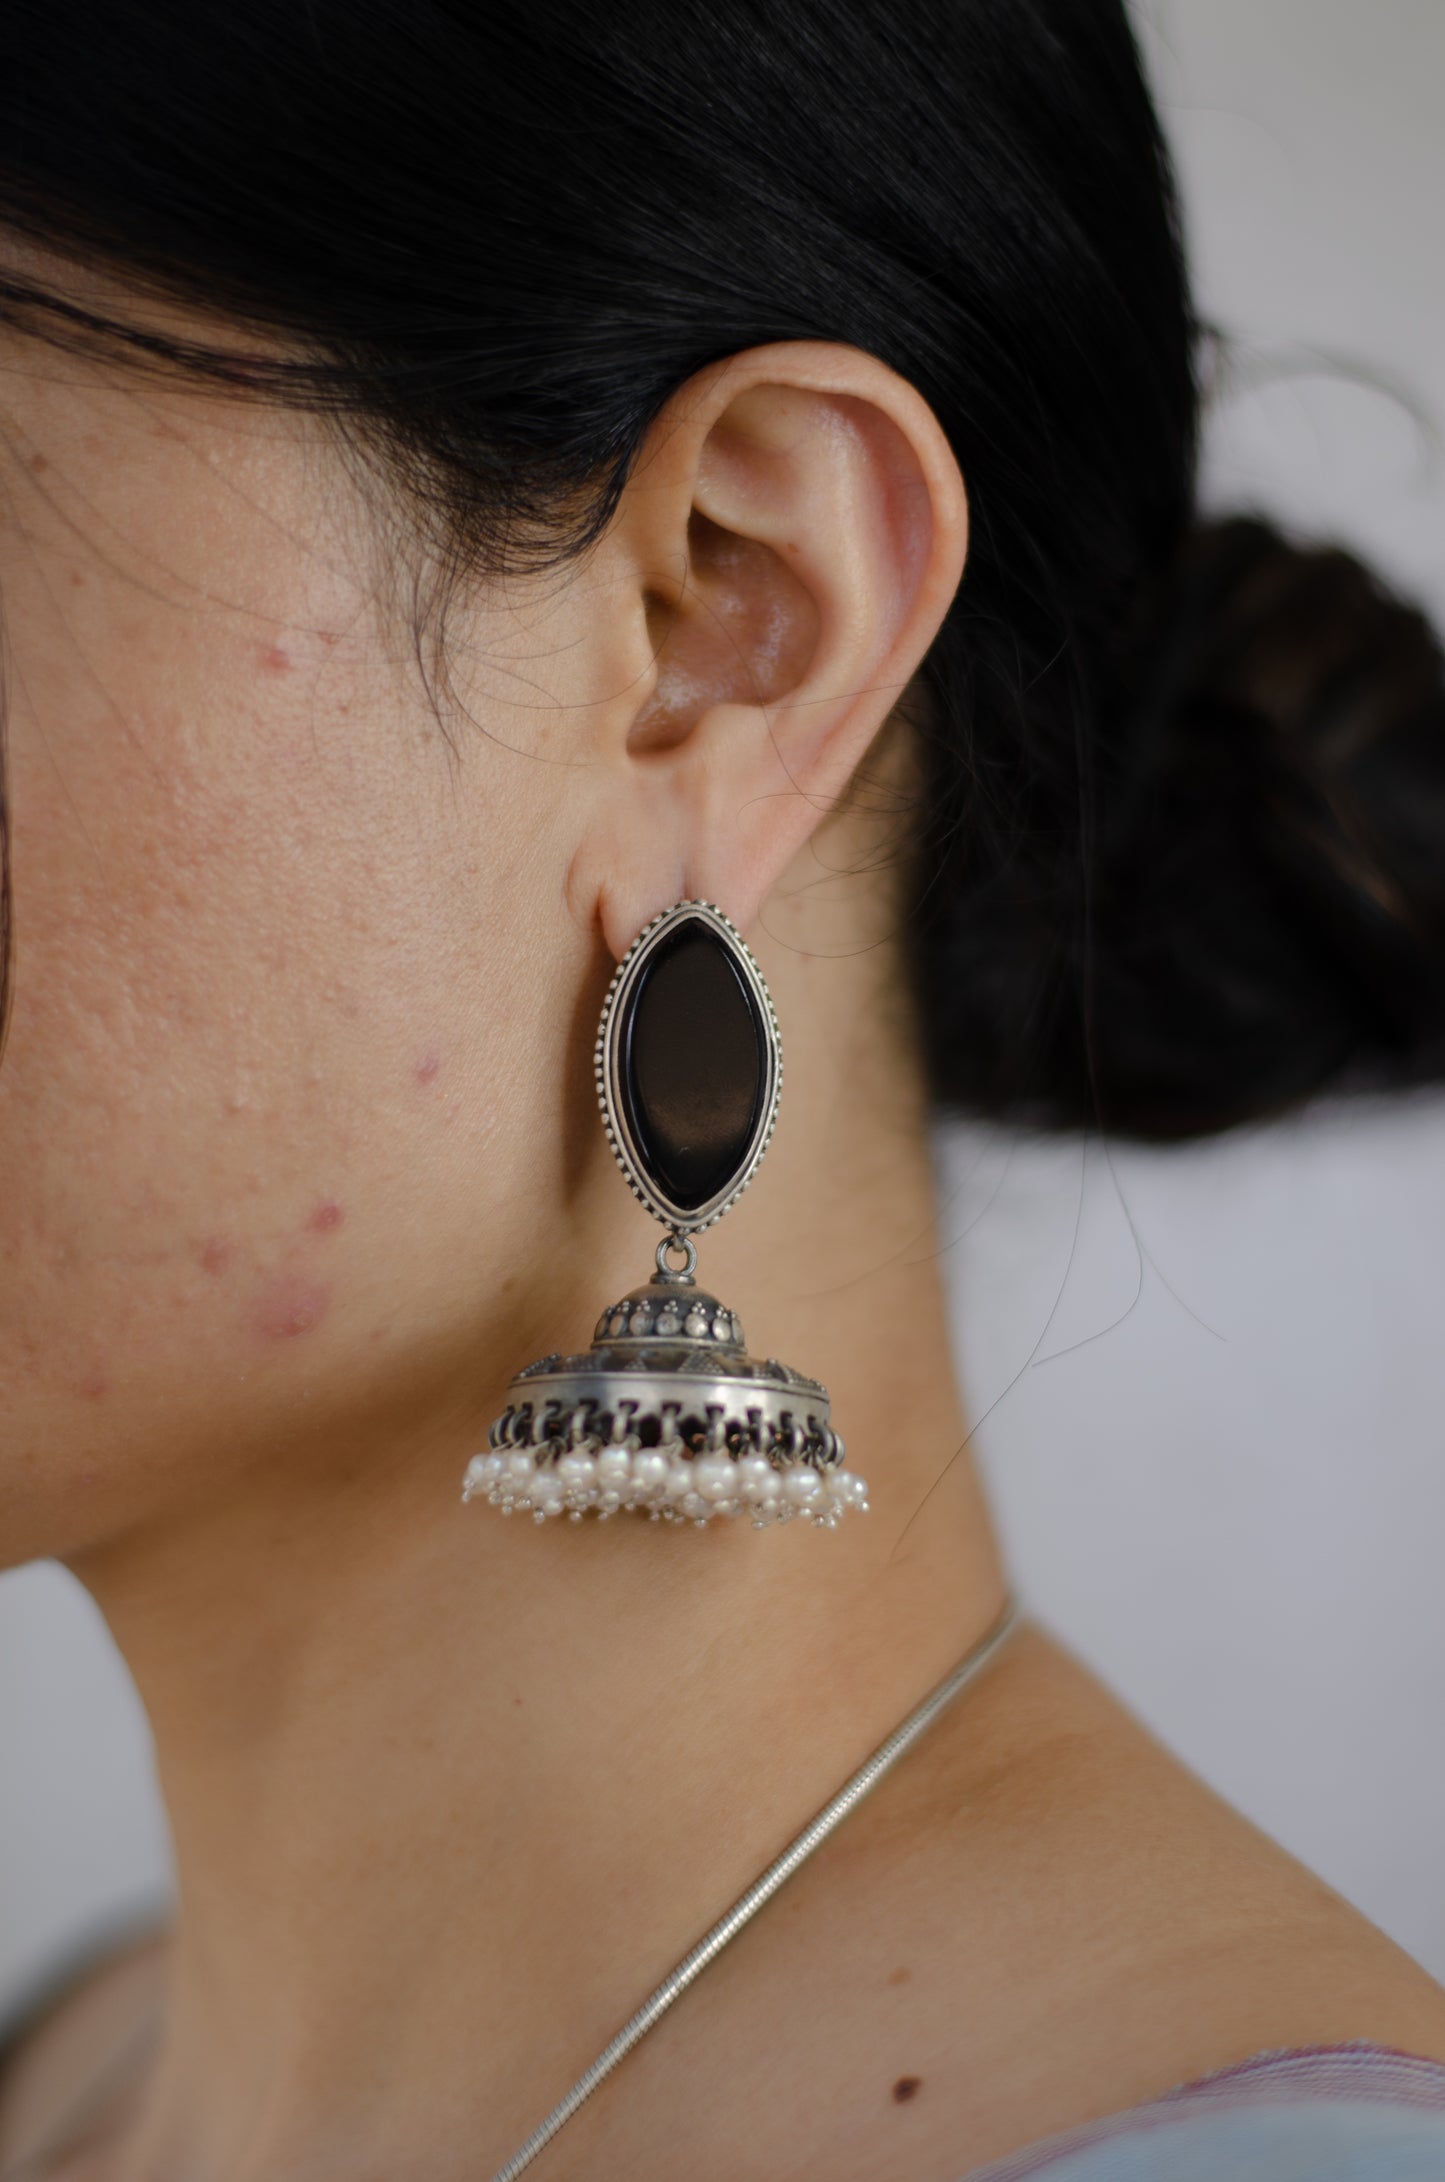 Handmade Silver  tone earrings with stone